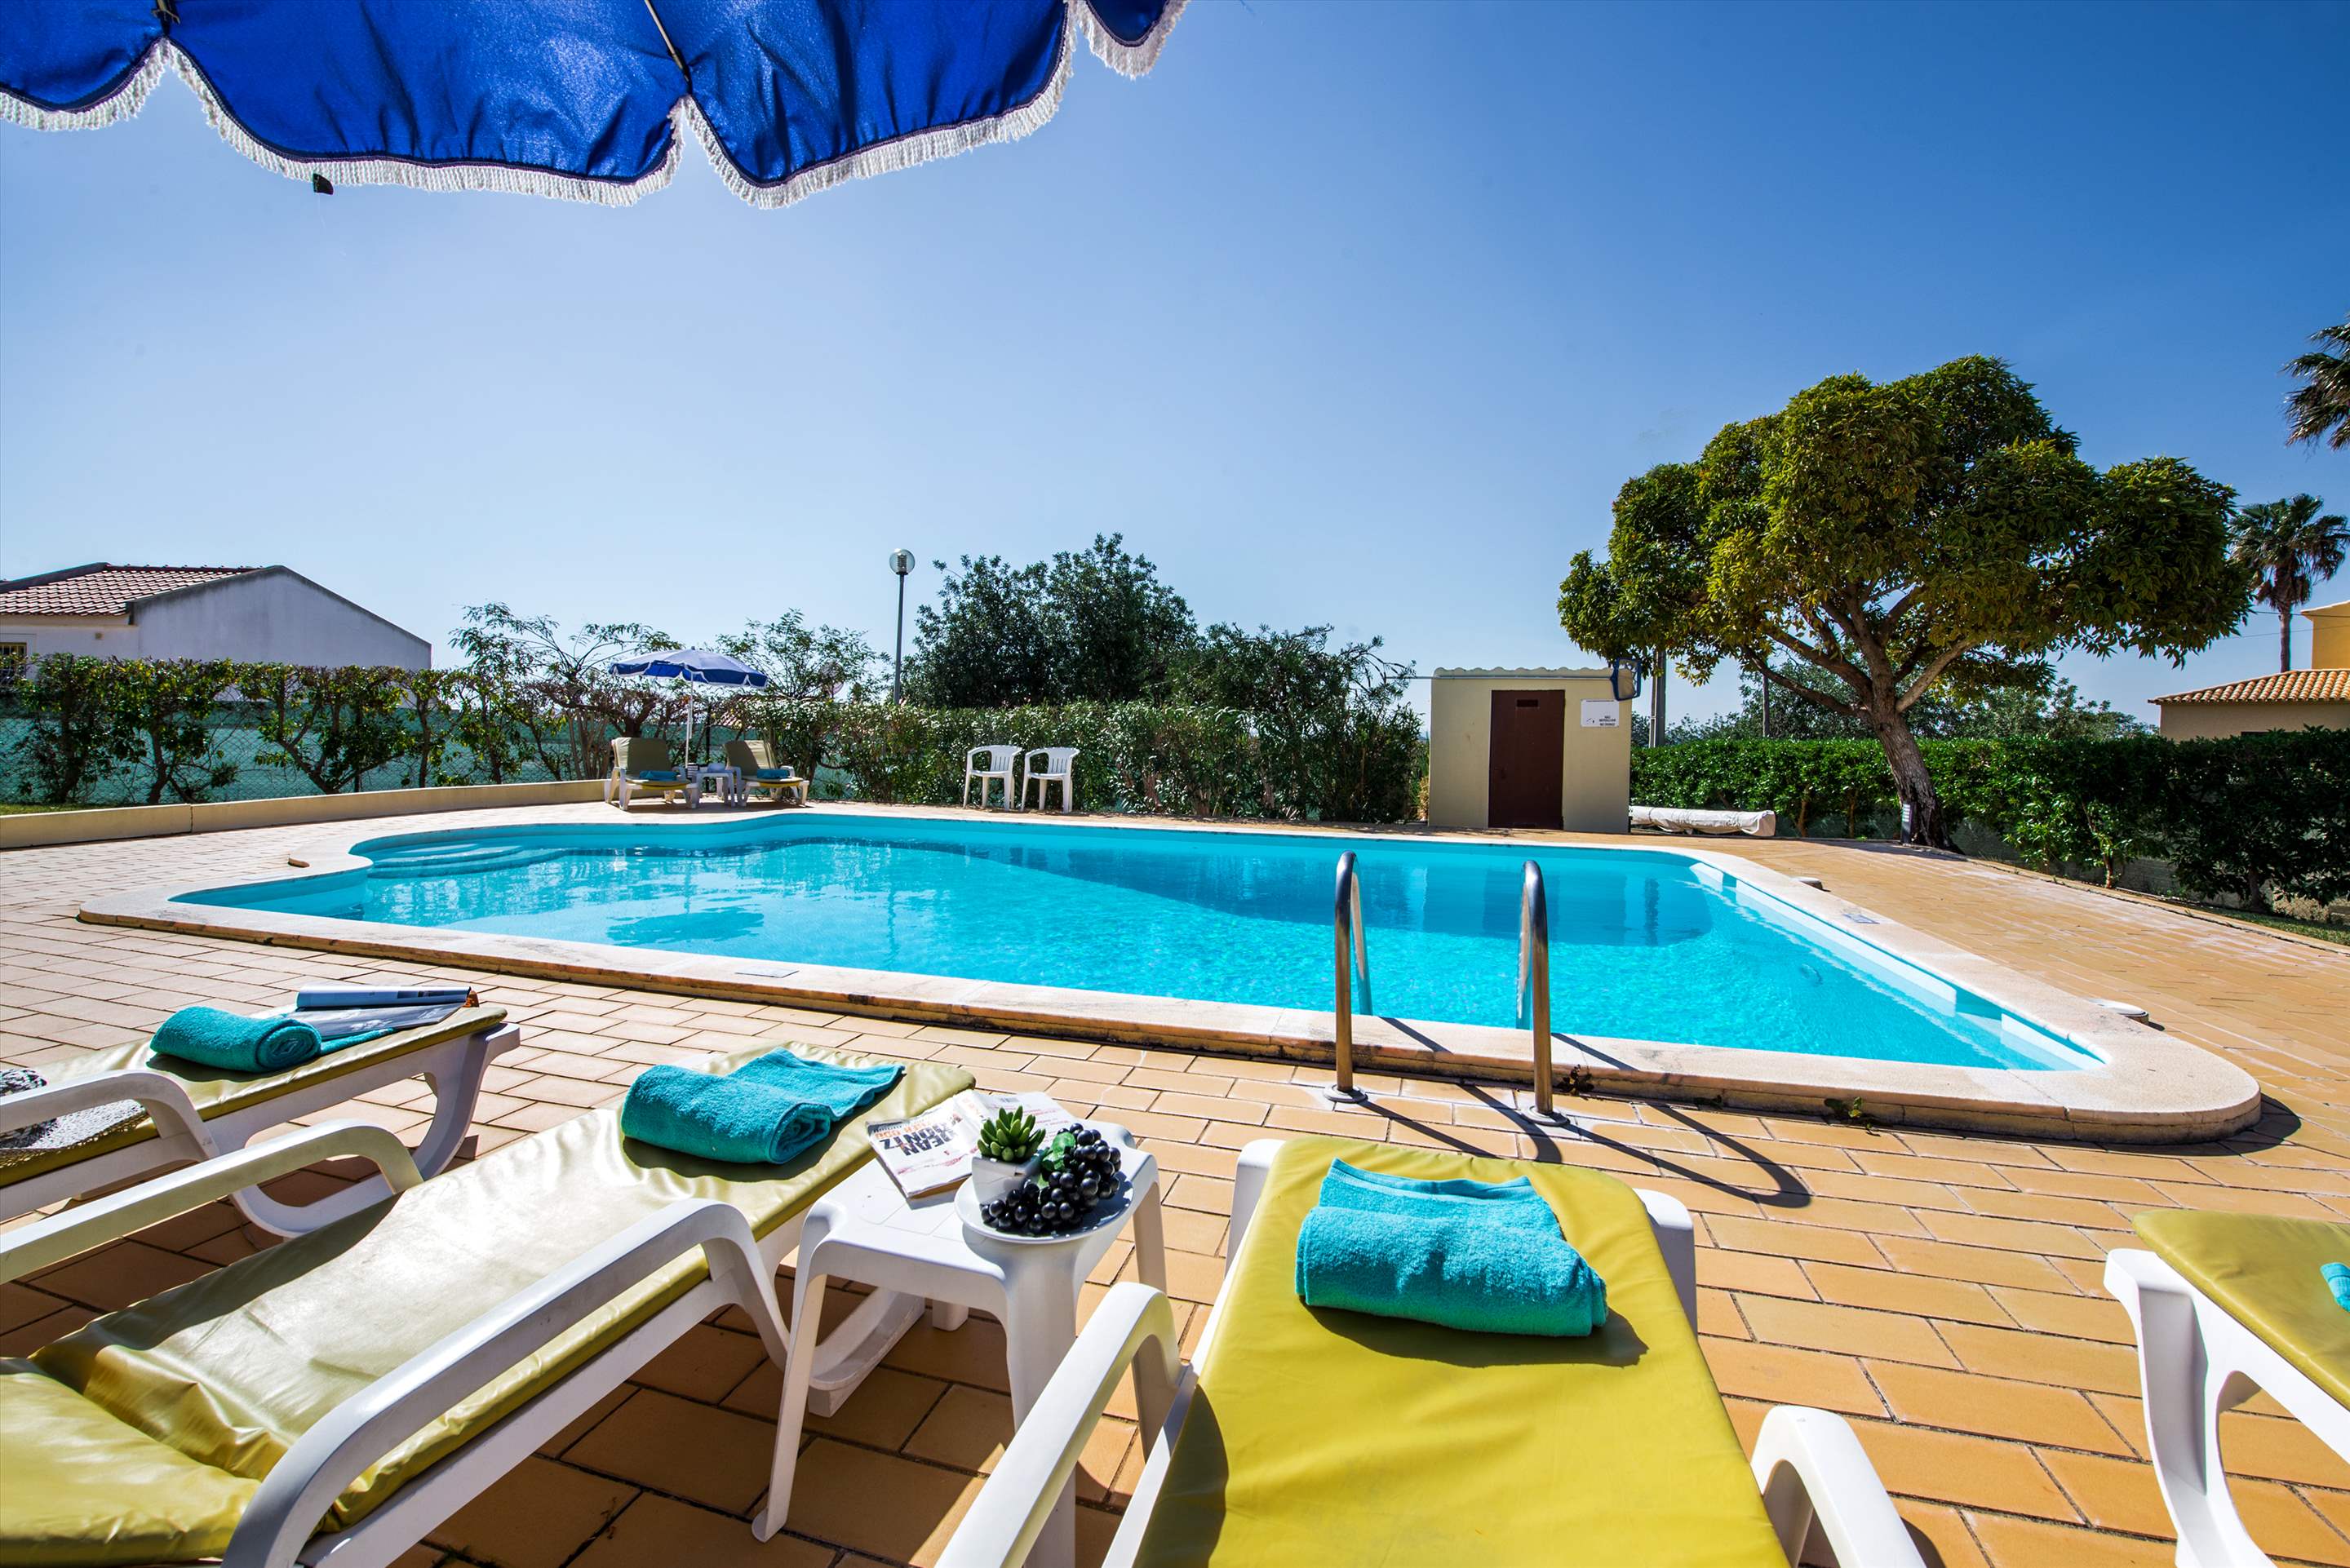 Villa Amendoeira, 7 to 8 persons rate, 4 bedroom villa in Gale, Vale da Parra and Guia, Algarve Photo #24